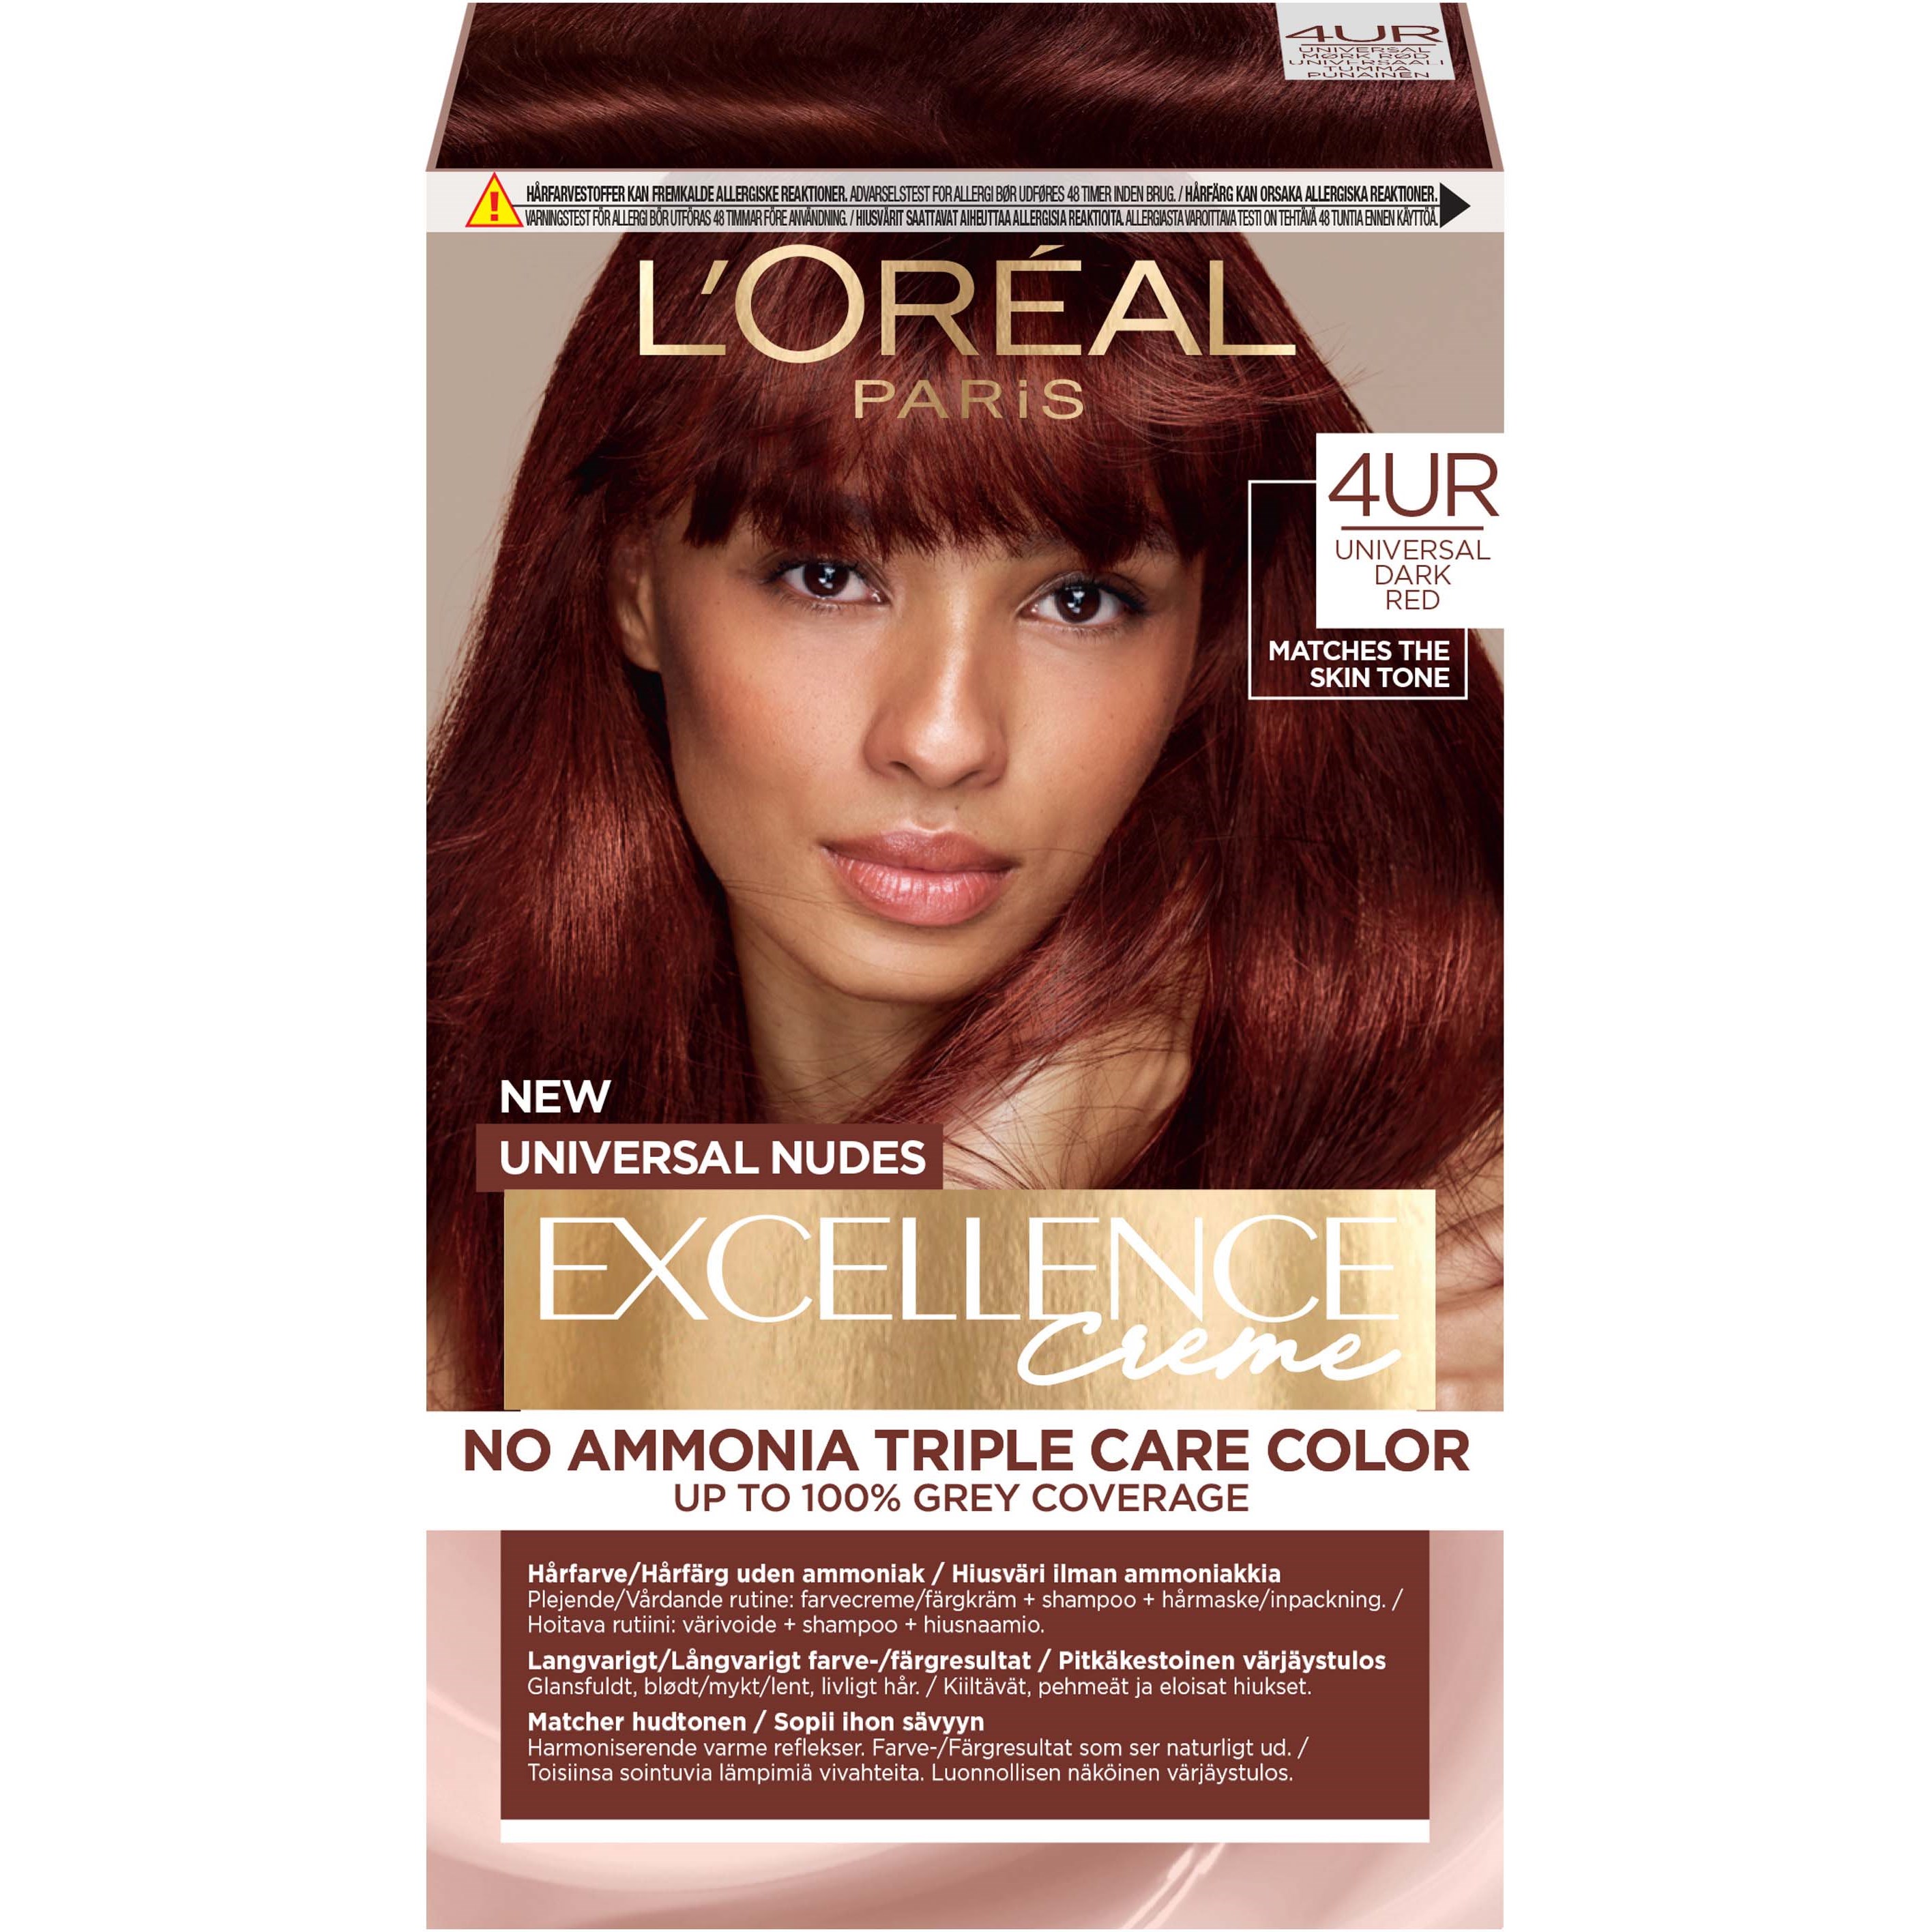 Bilde av Loreal Paris Excellence Creme Universal Nudes Hair Color 4ur Universal